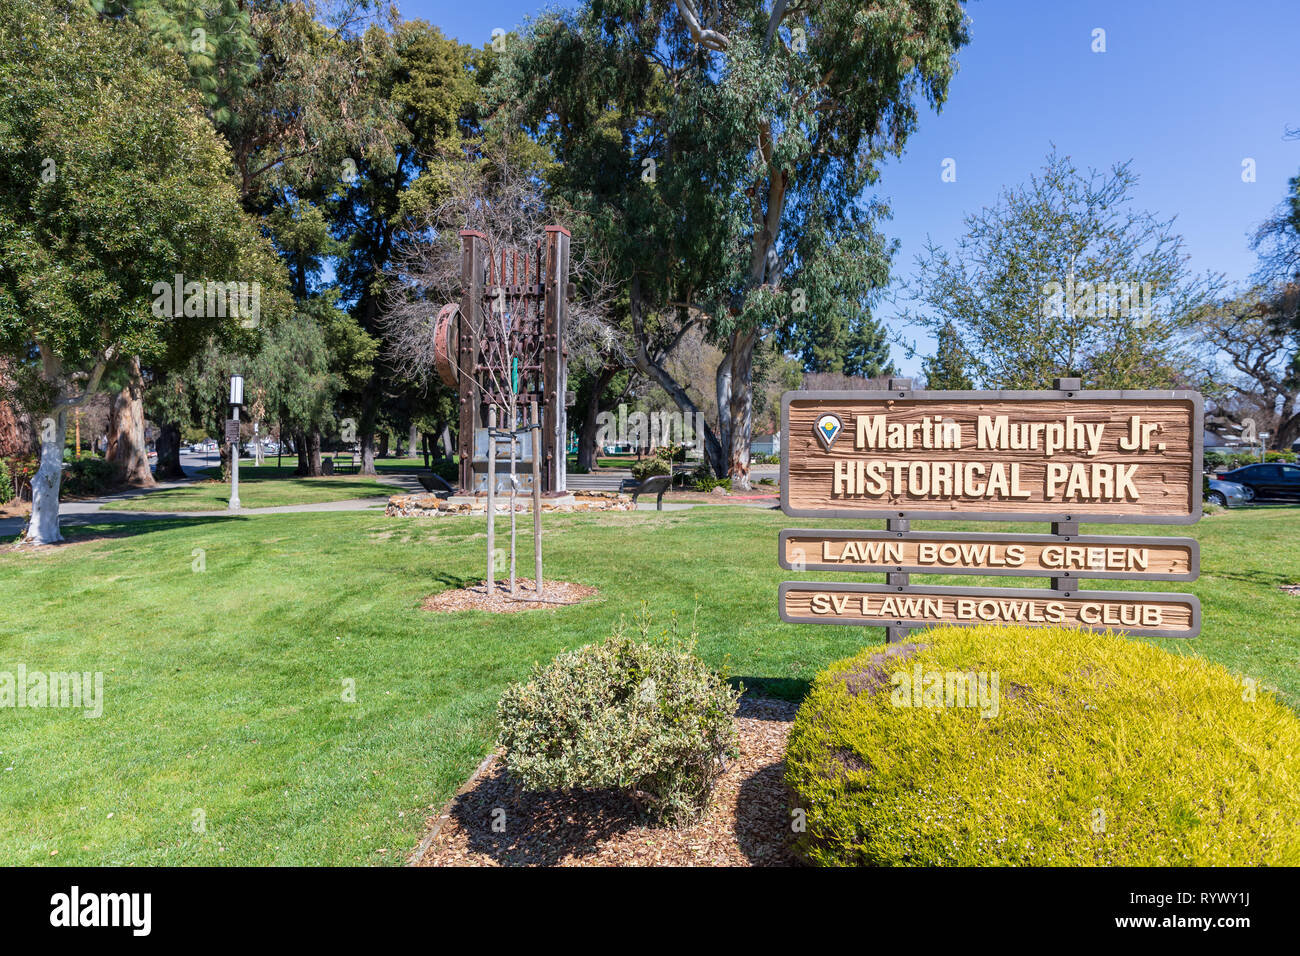 Martin Murphy Jr. Historical Park (Murphy Park), Lawn Bowls Green, SV Lawn Bowls Club; Sunnyvale, California, USA Stock Photo